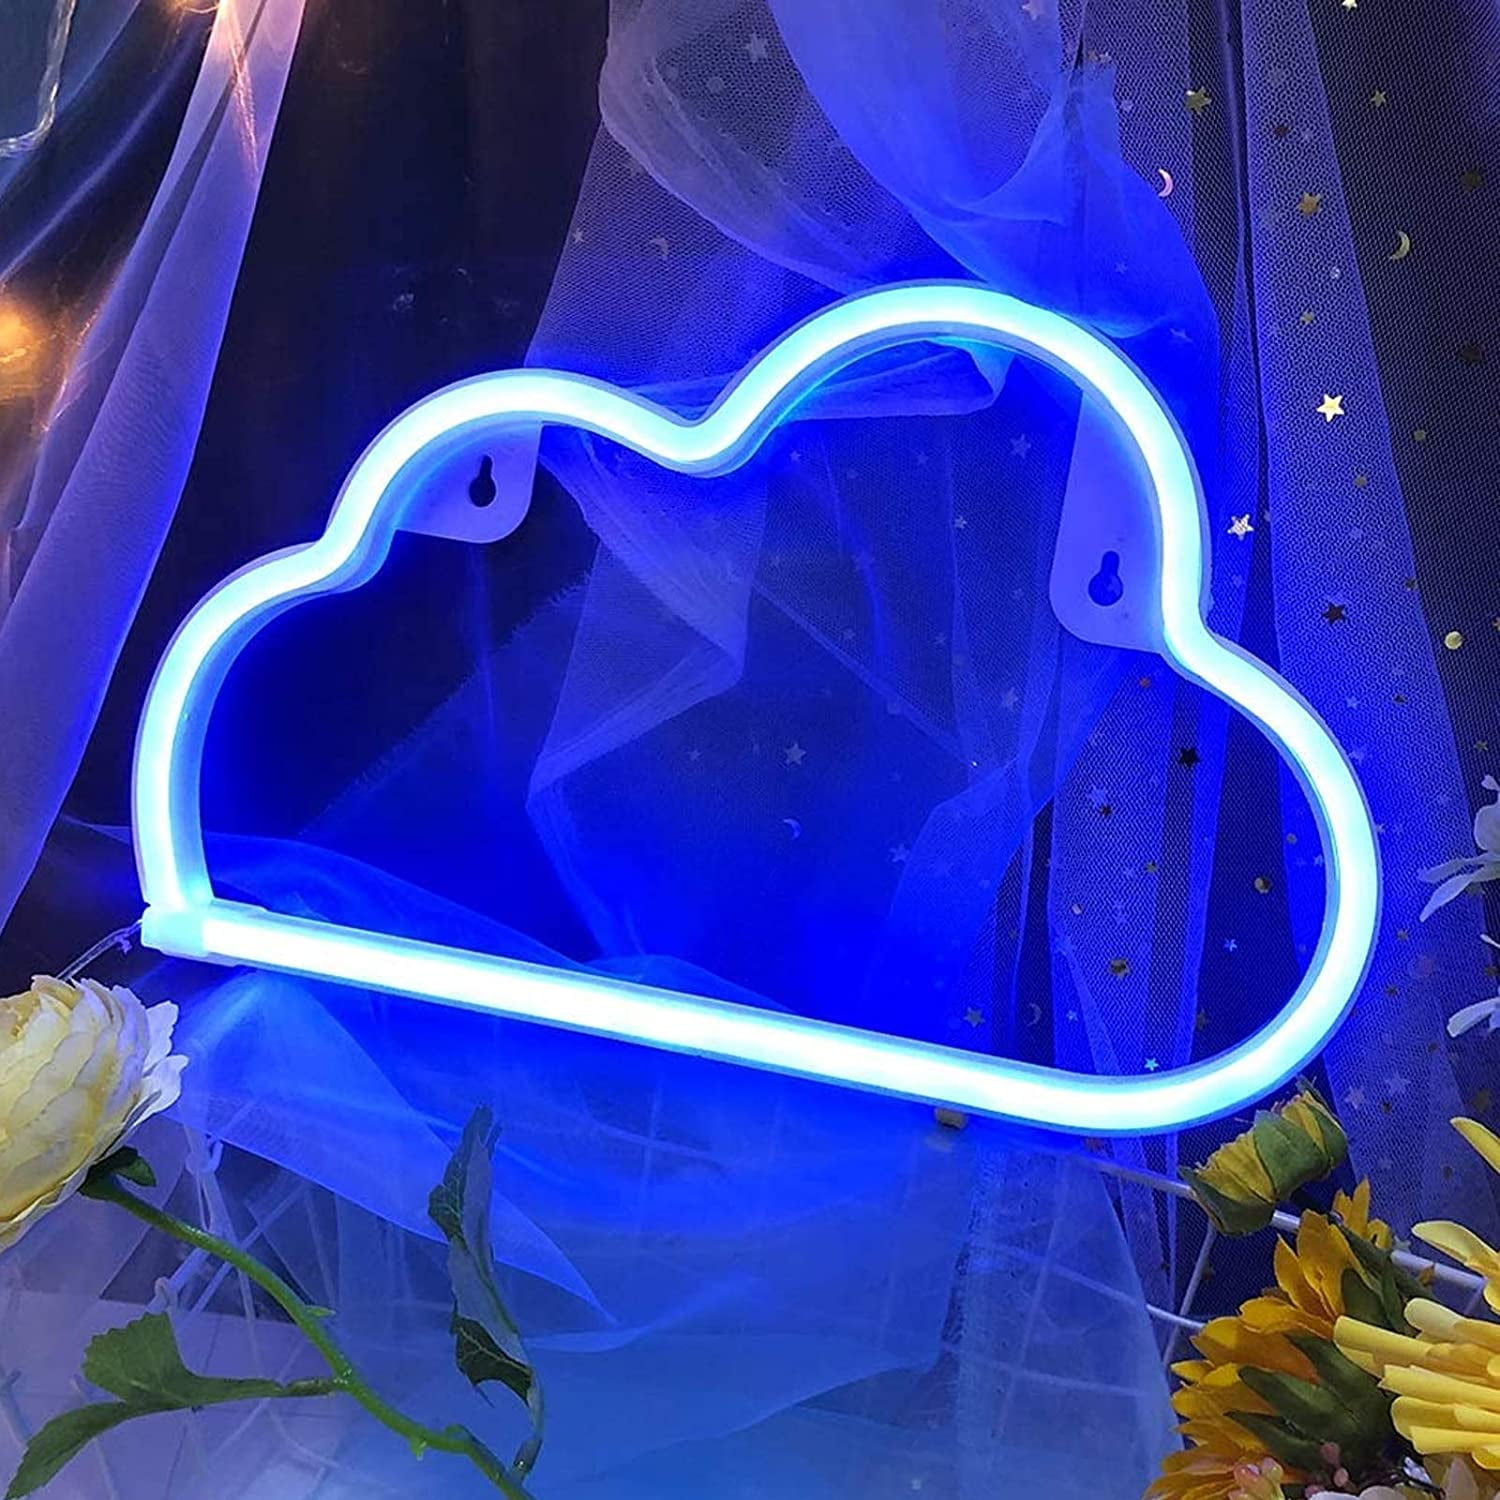 White Cloud Blue Moon Acrylic Neon Sign 14/" Bedroom Artwork Light Decor Lamp